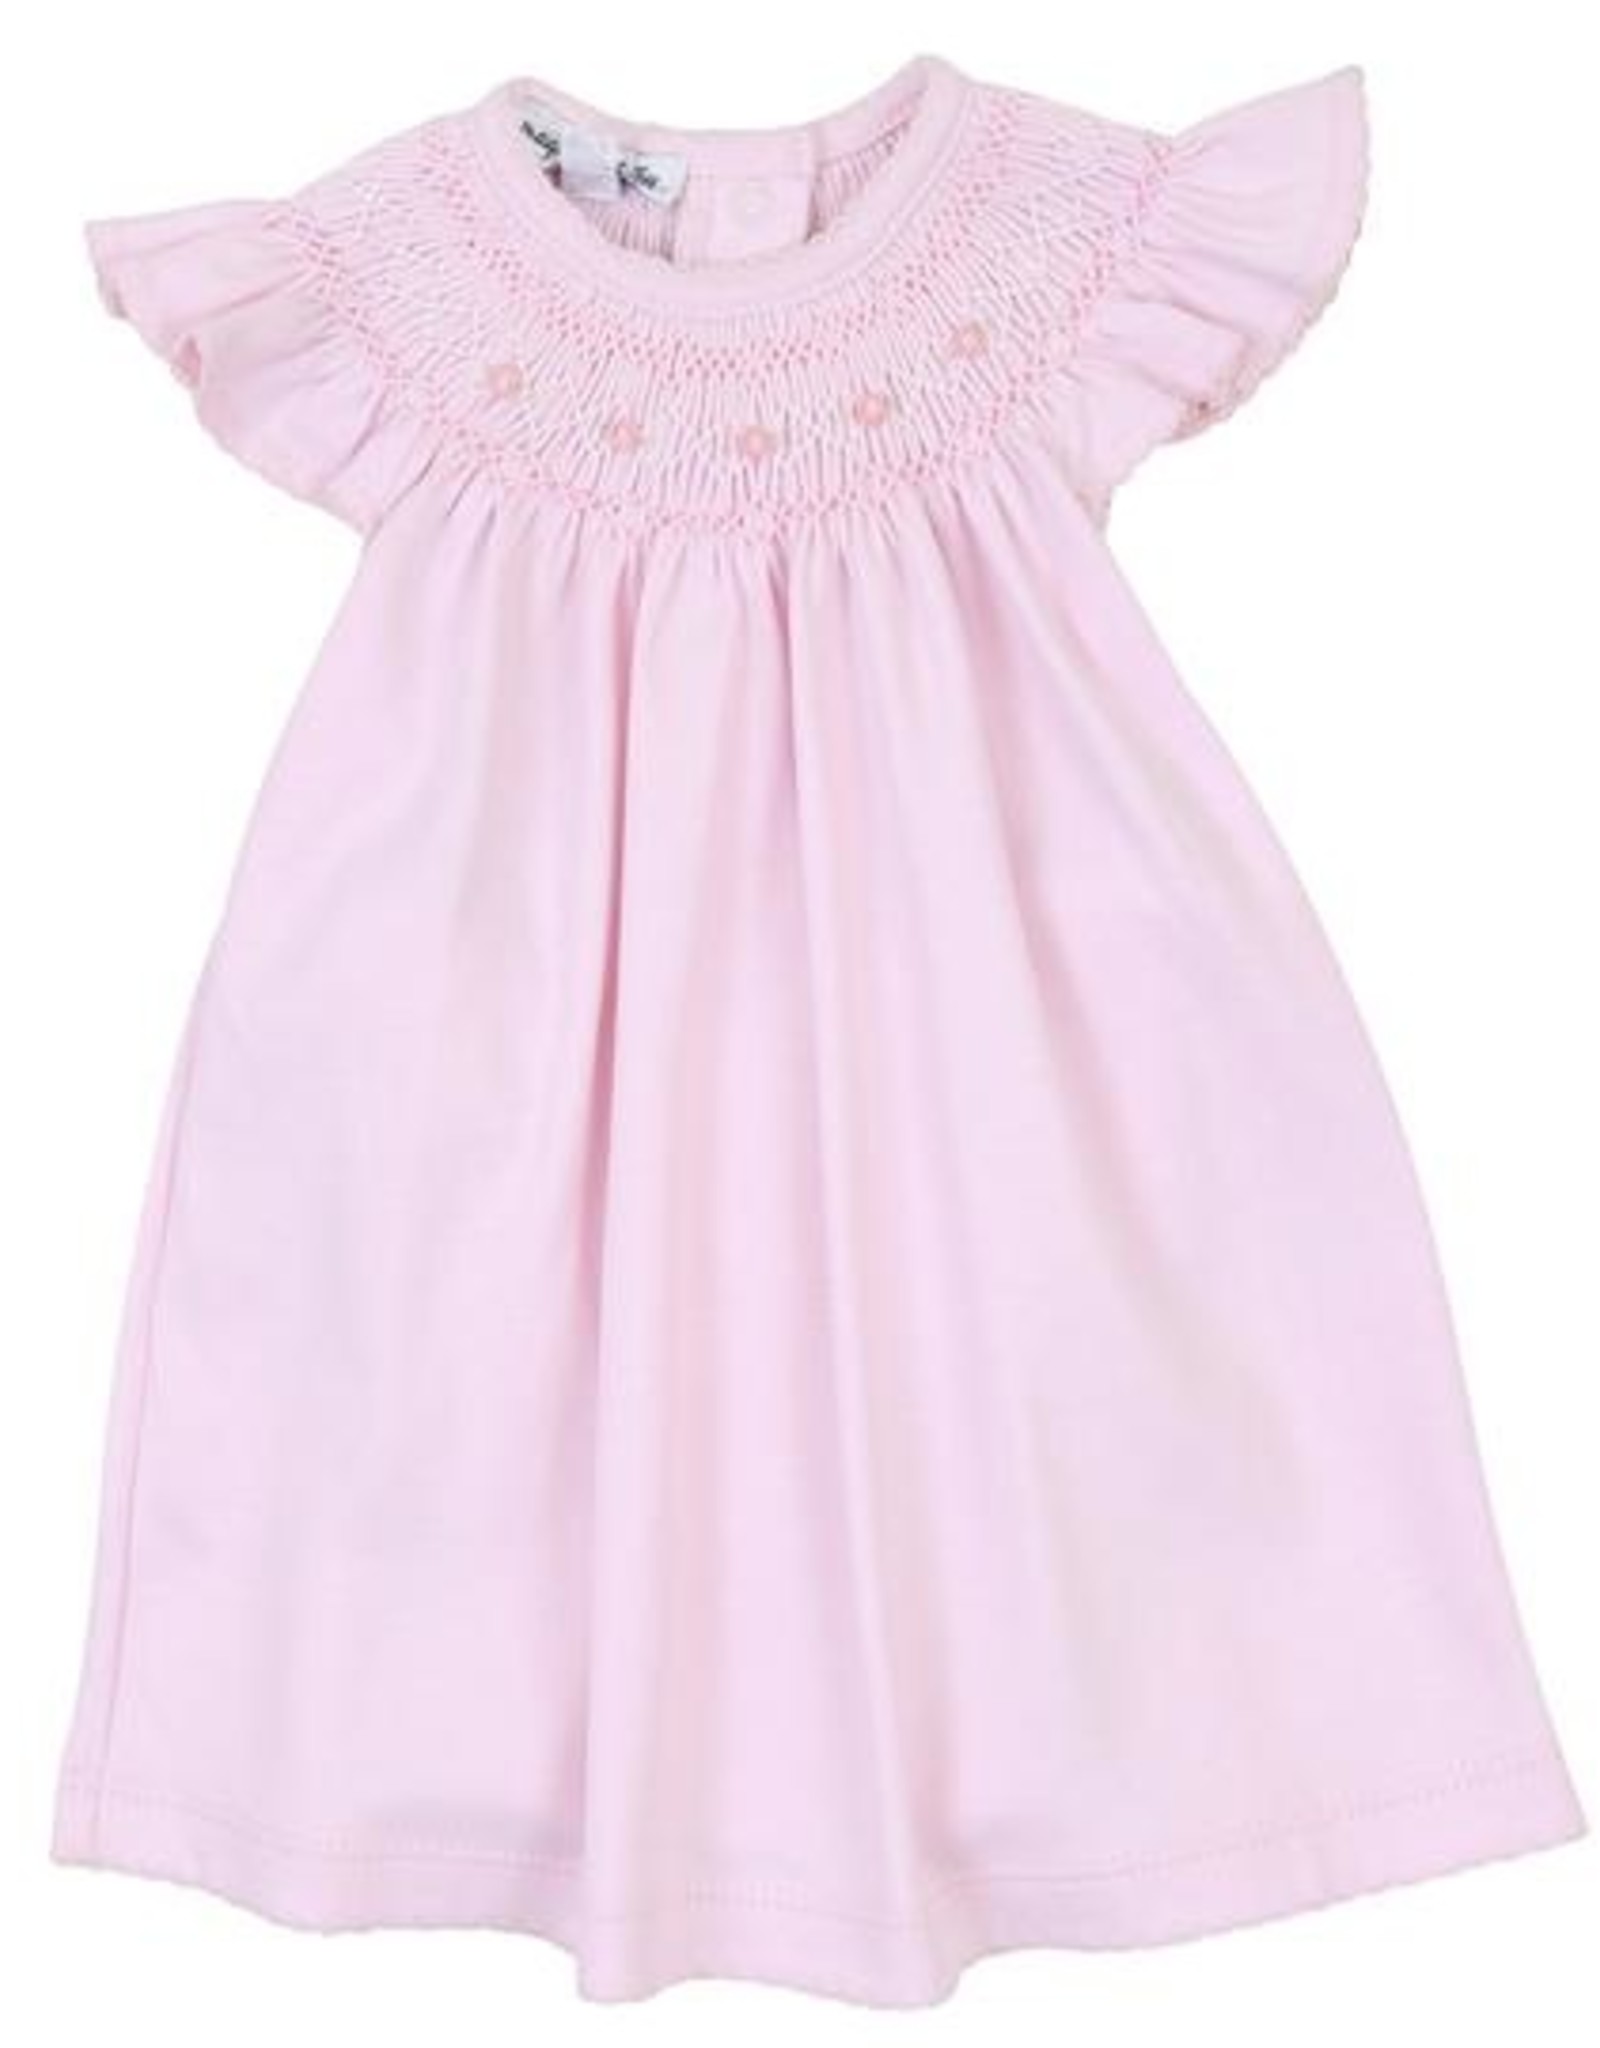 Magnolia Baby Mandy And Mason's Smocked Pink Dress